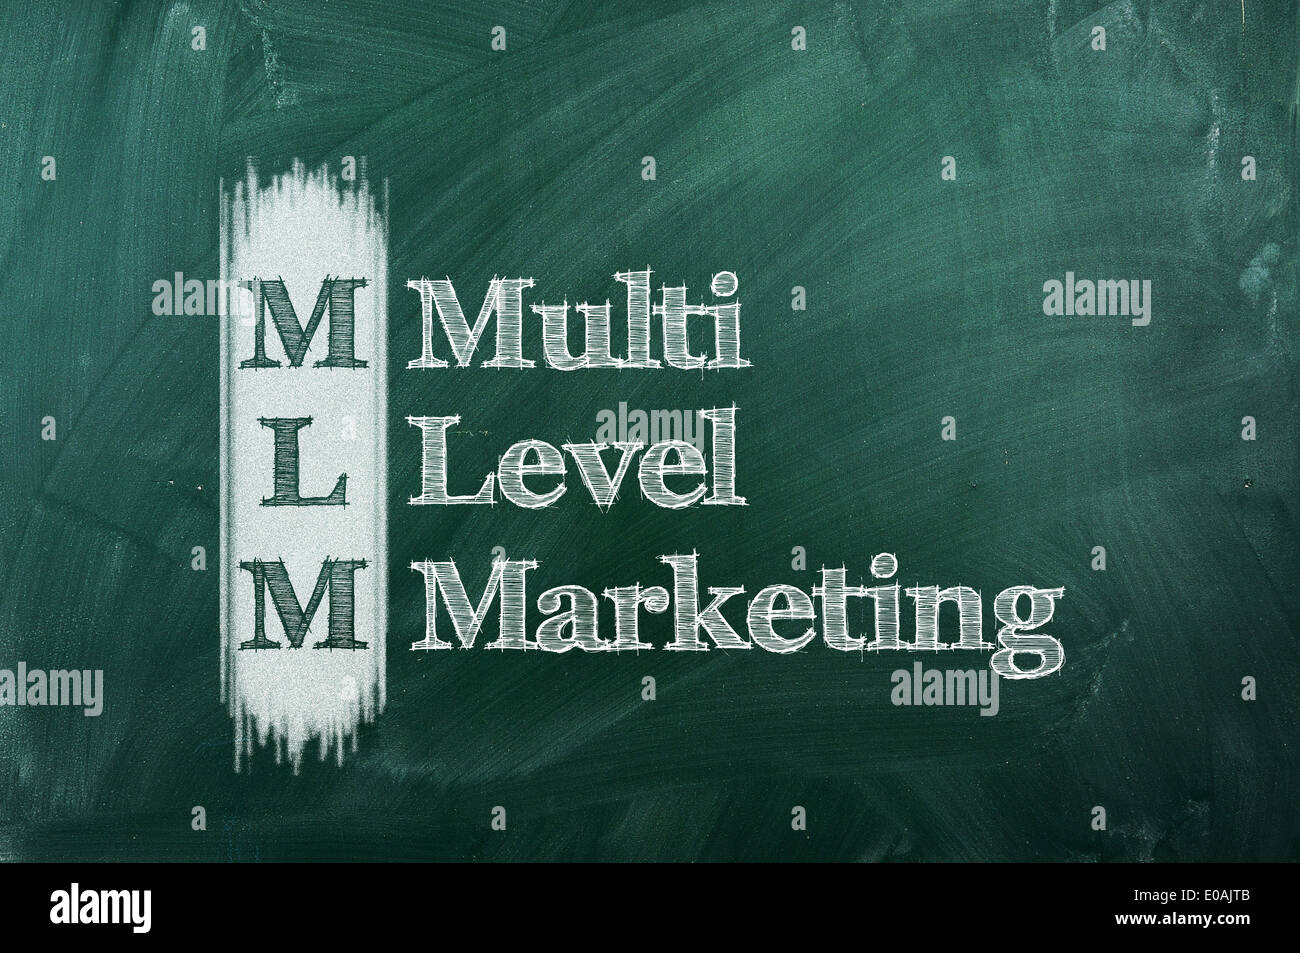 mlm - multi level marketing on green chalkboard Stock Photo